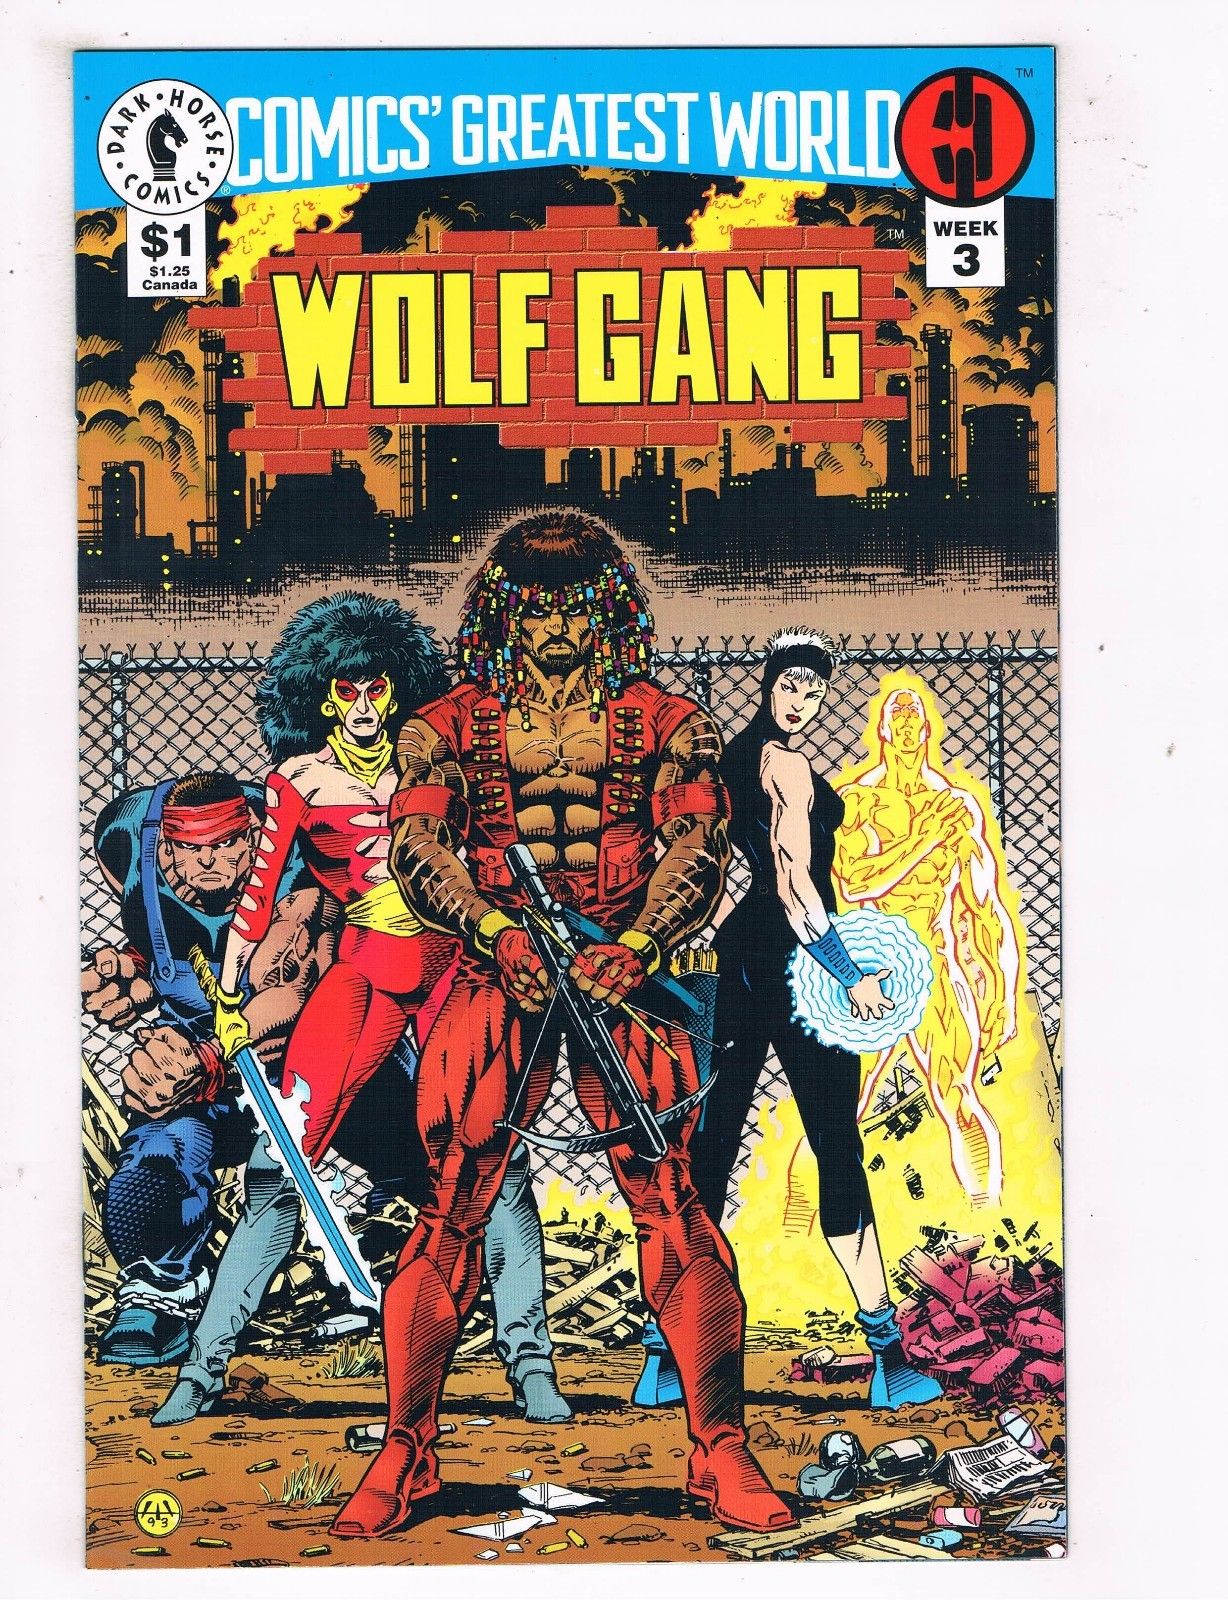 King Tiger #1-4 VF/NM complete series + comics greatest world - dark horse  set